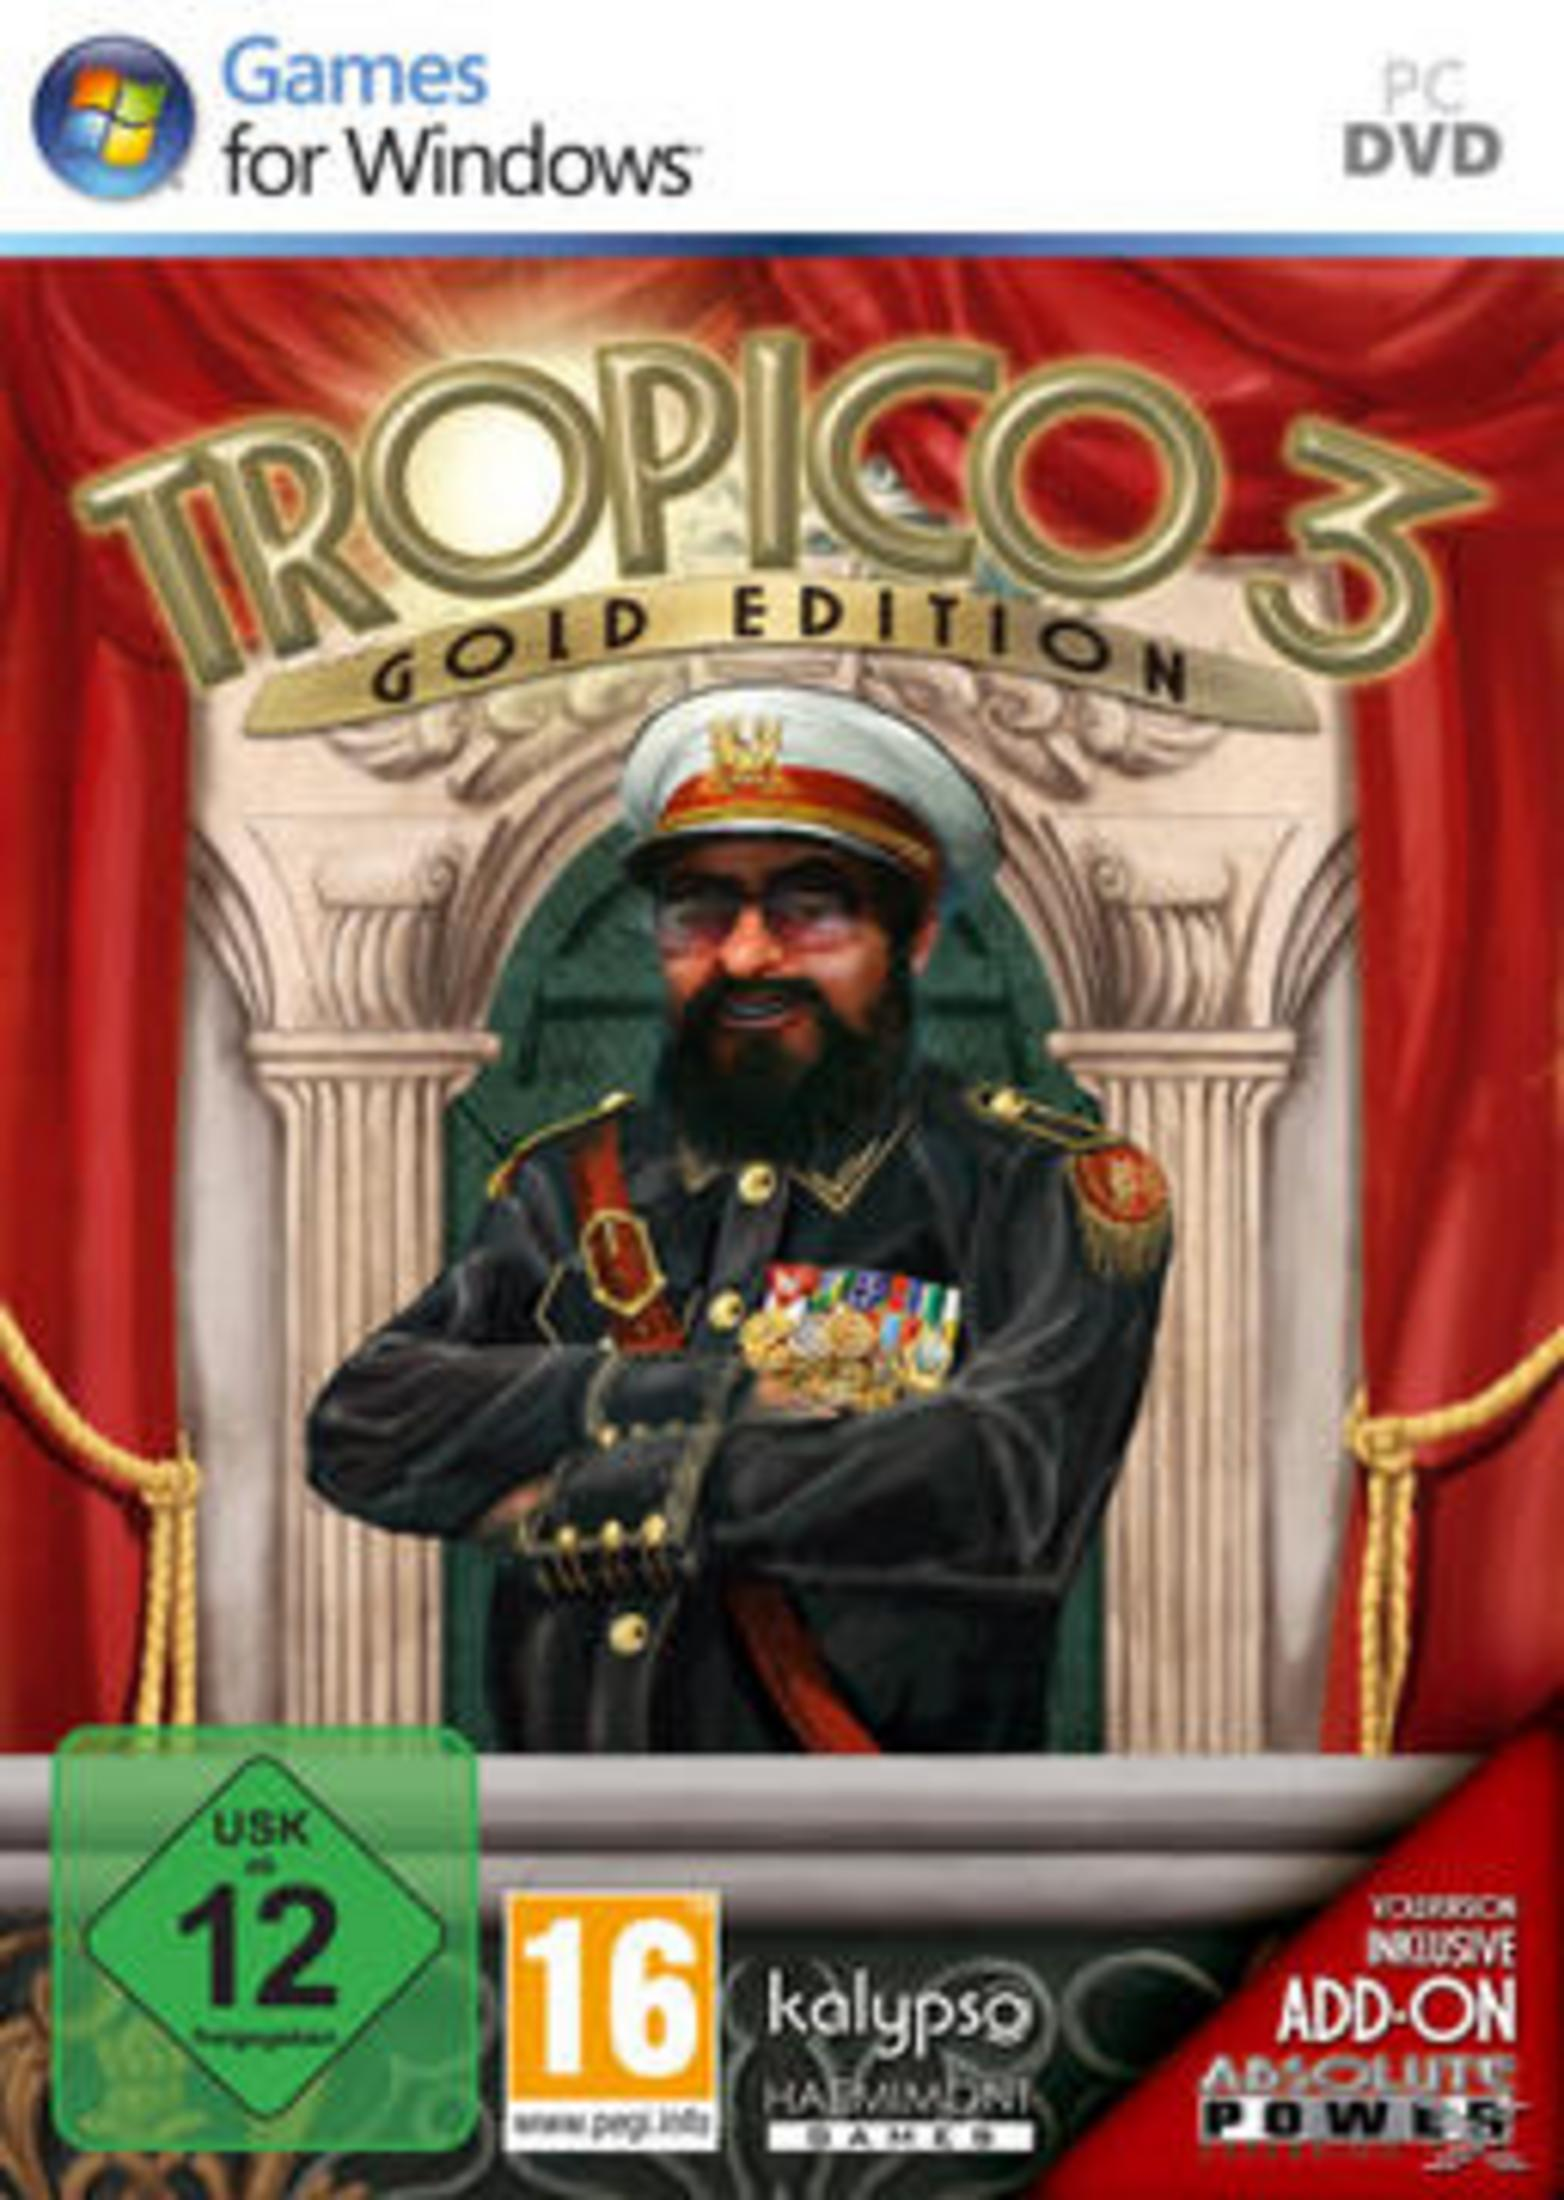 Tropico 3 Gold [PC] - Edition